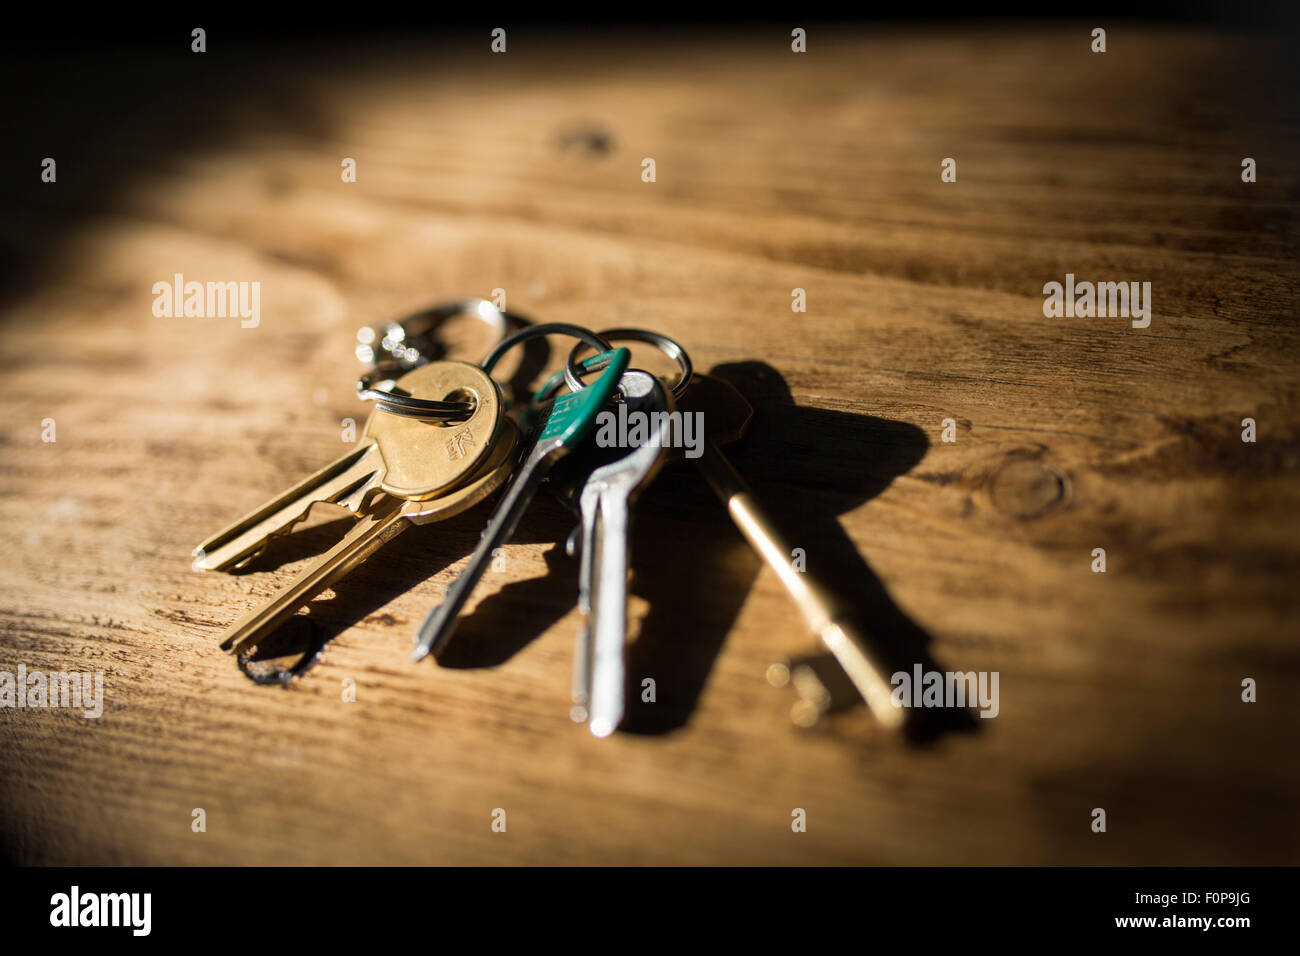 a bunch of keys Stock Photo